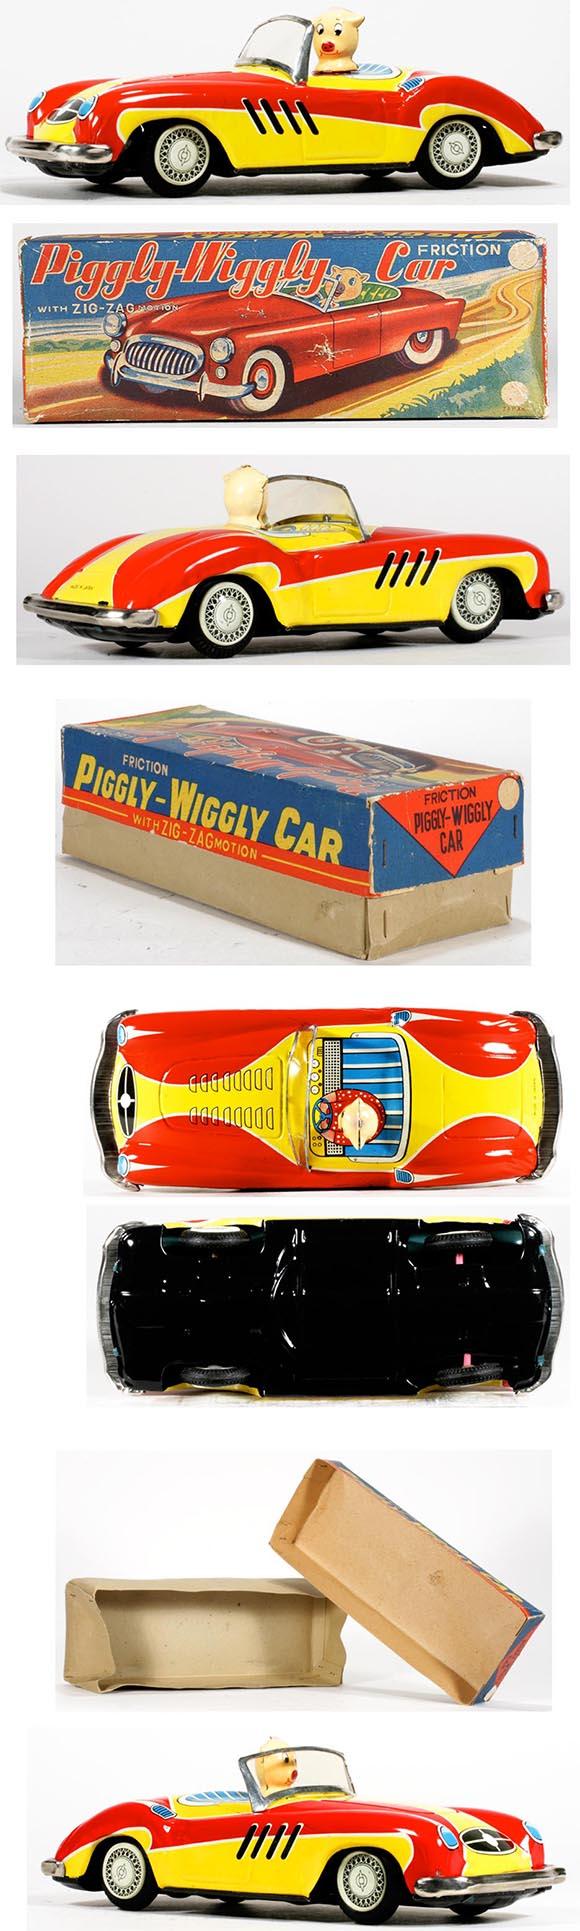 c.1956 Japan, Piggly-Wiggly Car in Original Box